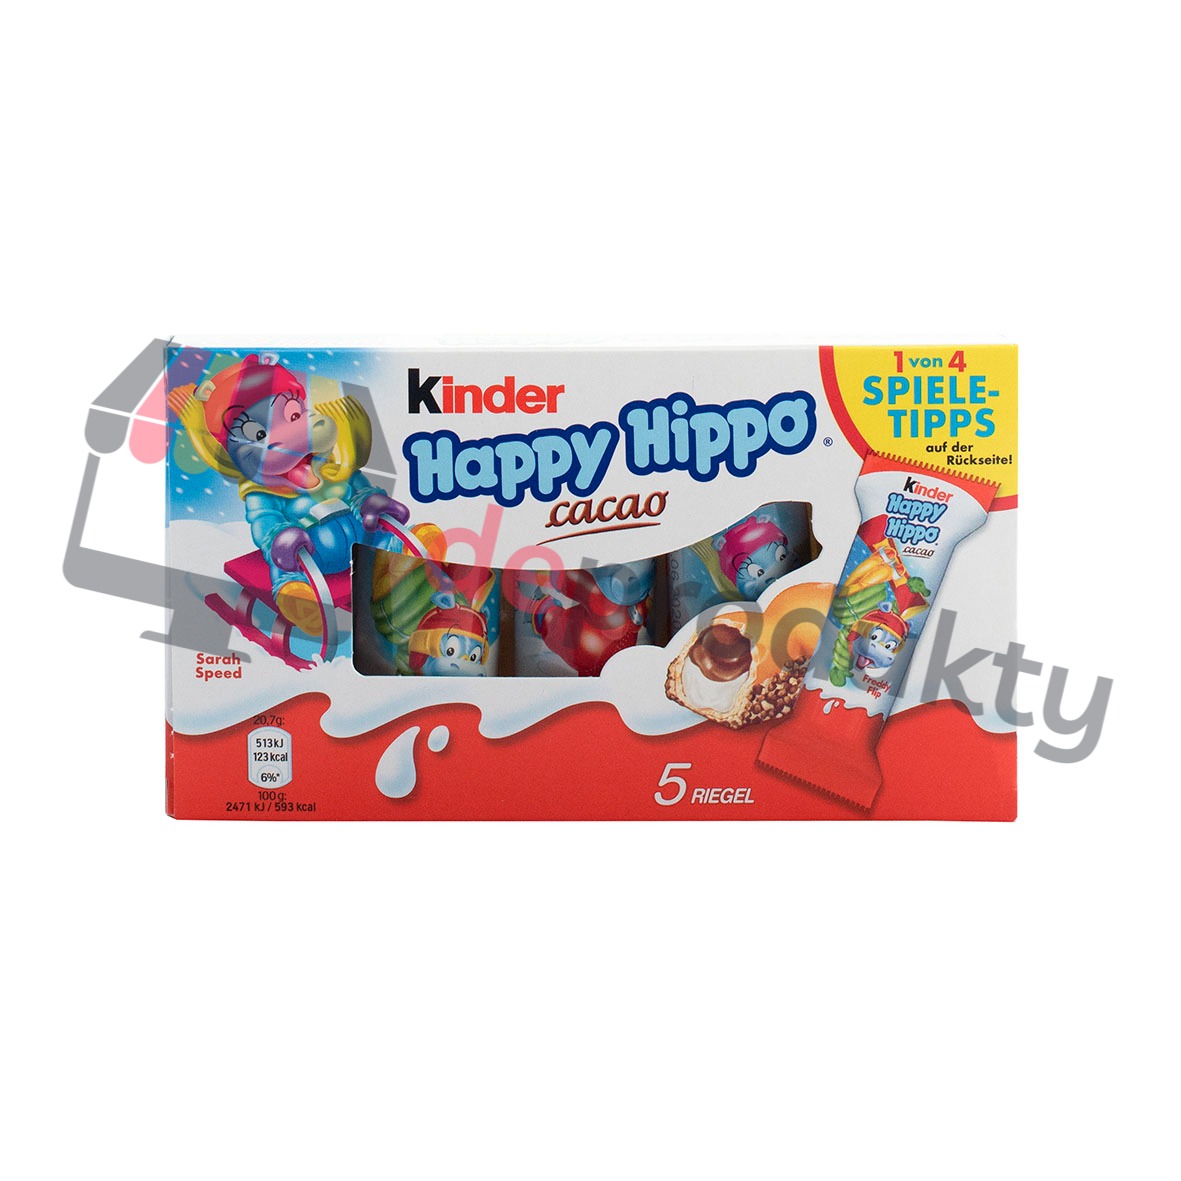 Batoniki Kinder Happy Hippo 100g